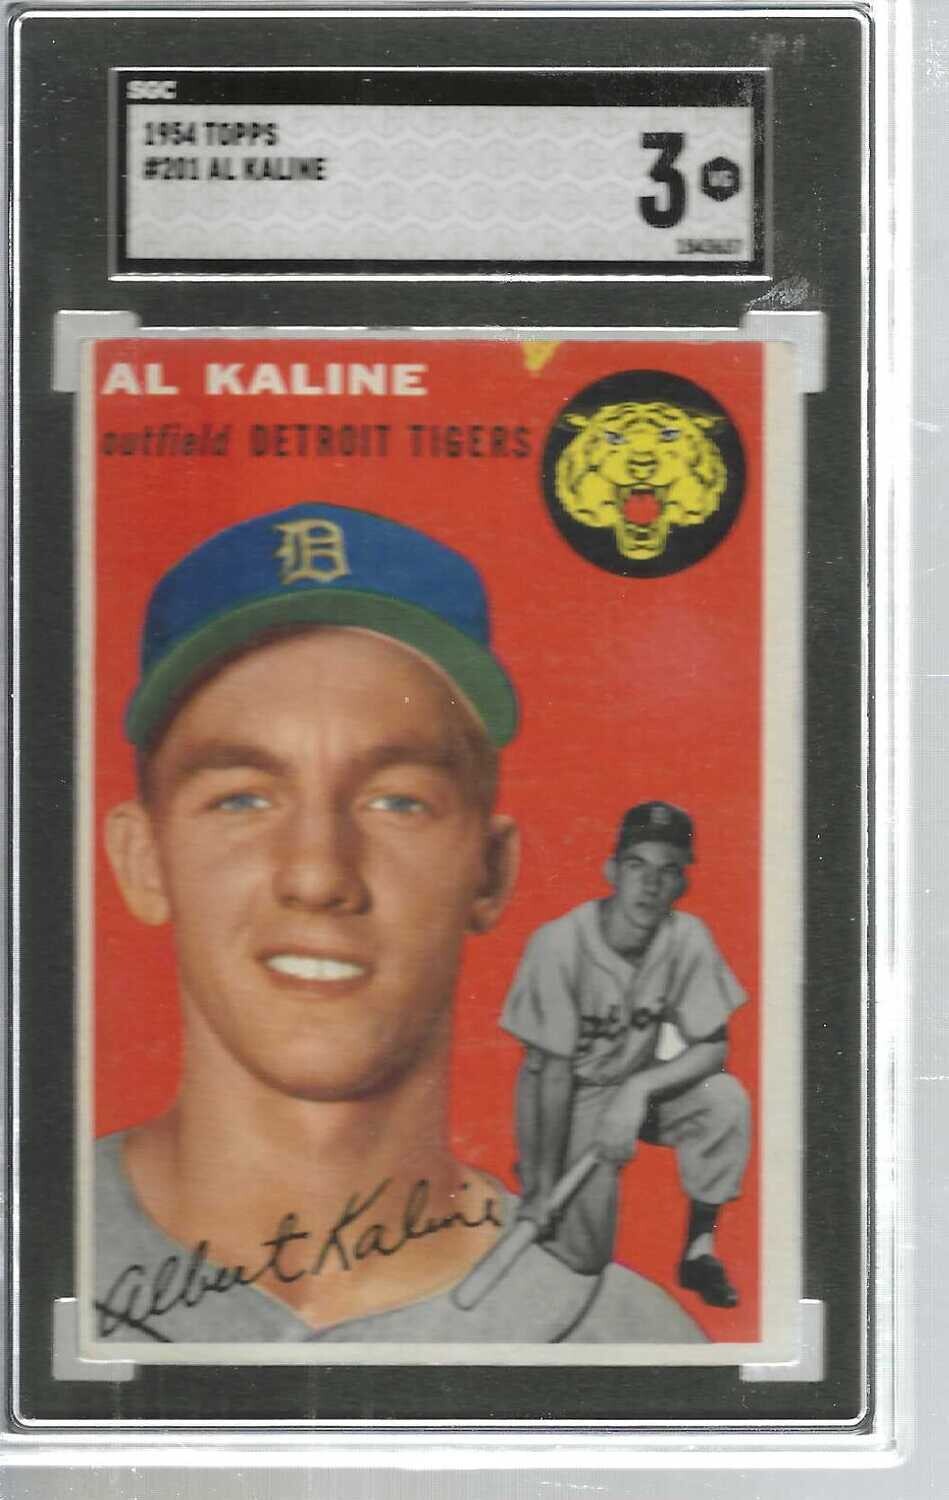 1954 Topps #201 Al Kaline rookie SGC 3